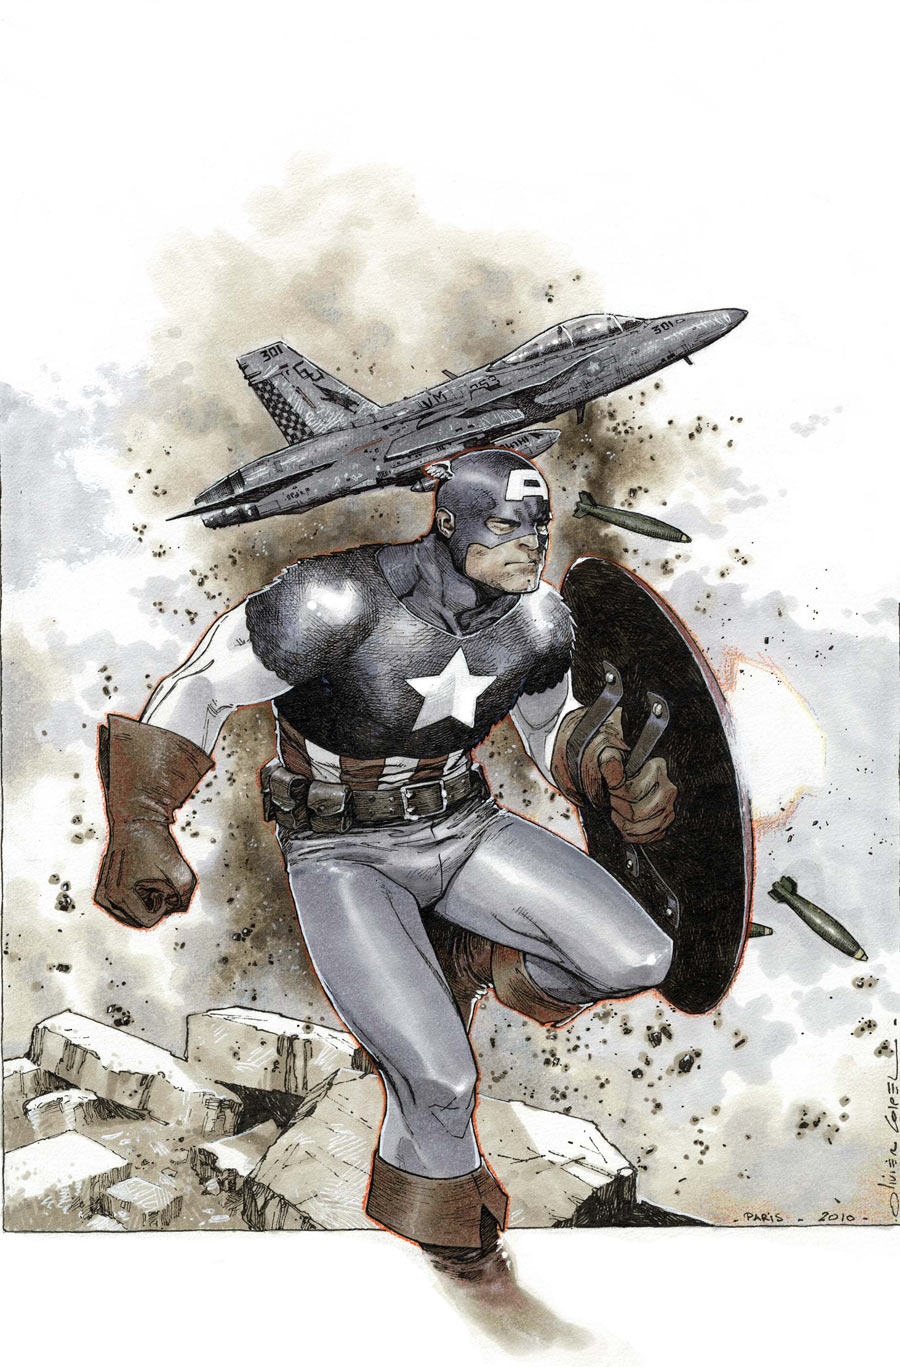 Captain America #01 (Variant Cover)